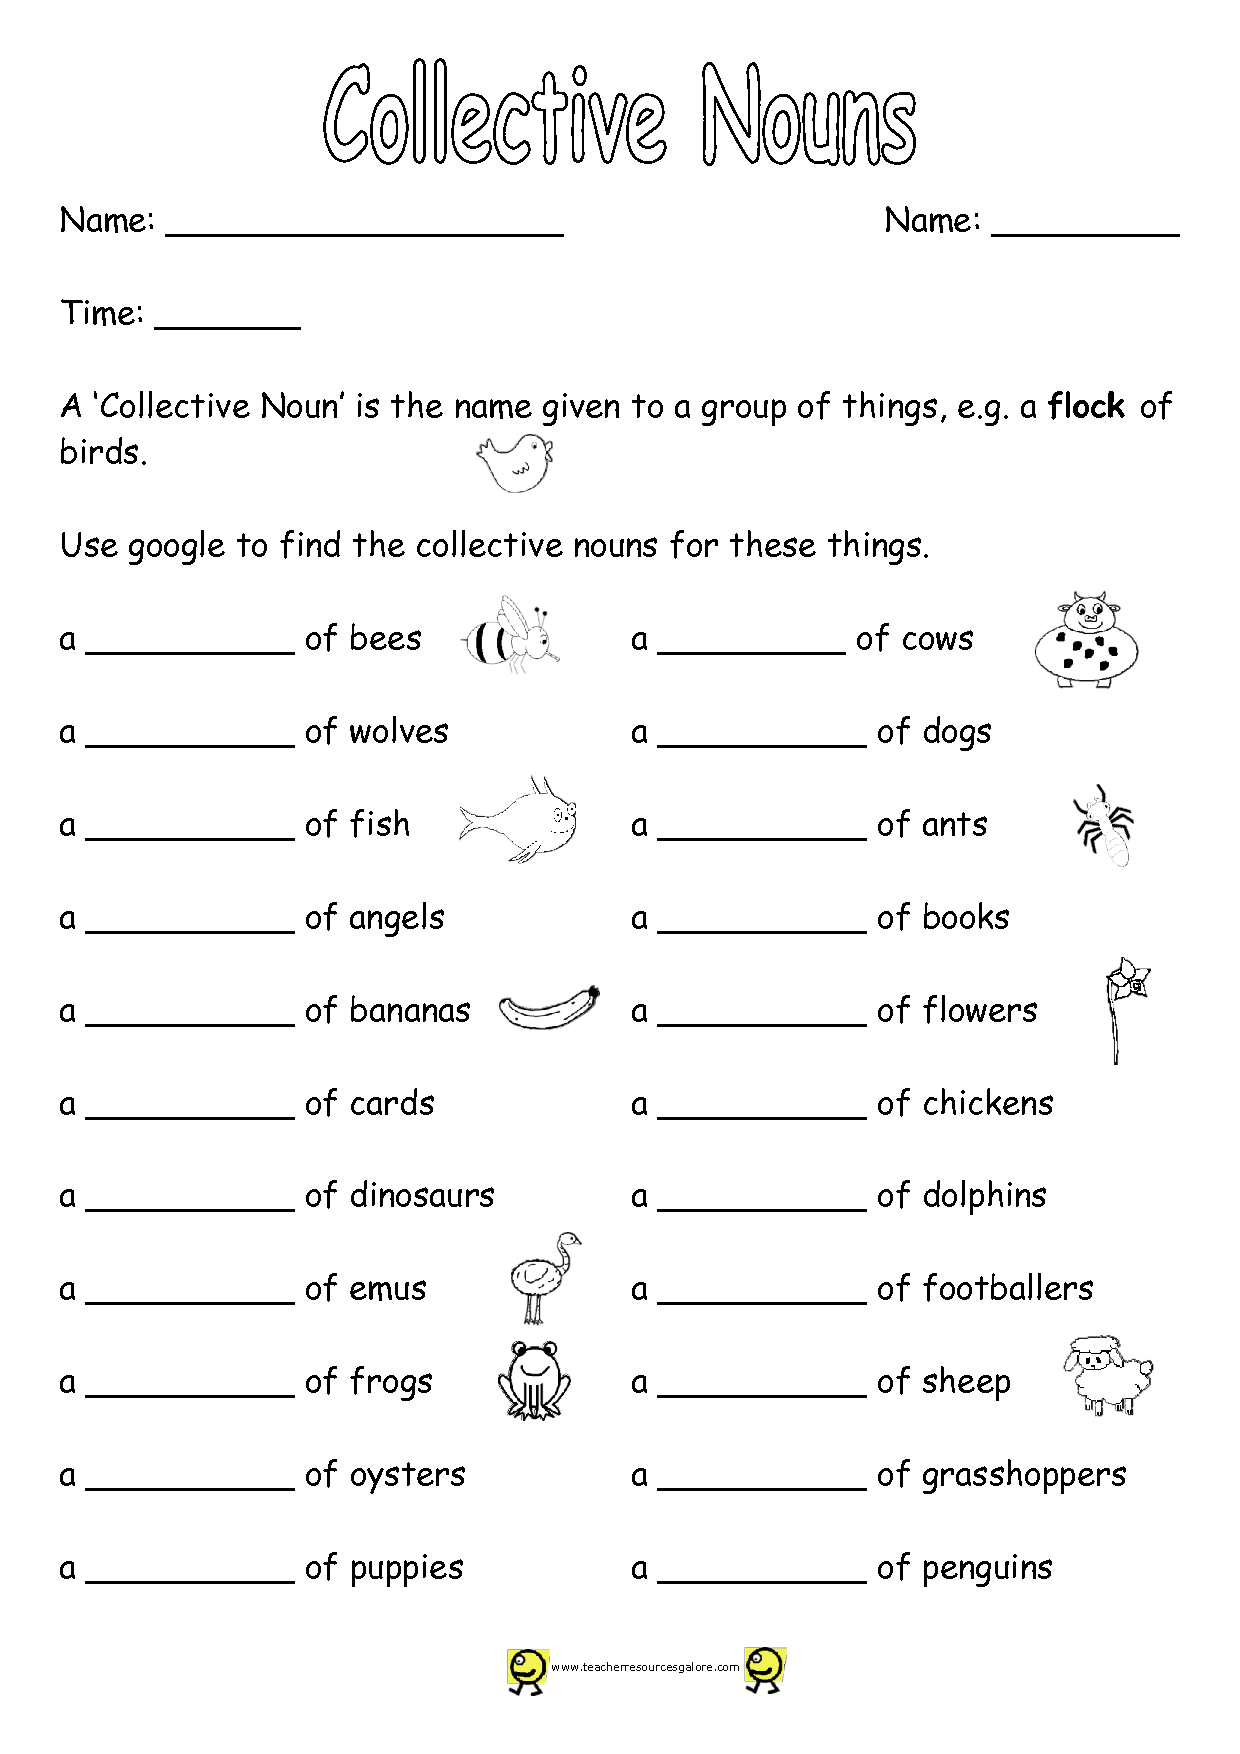 15-noun-coloring-worksheets-worksheeto